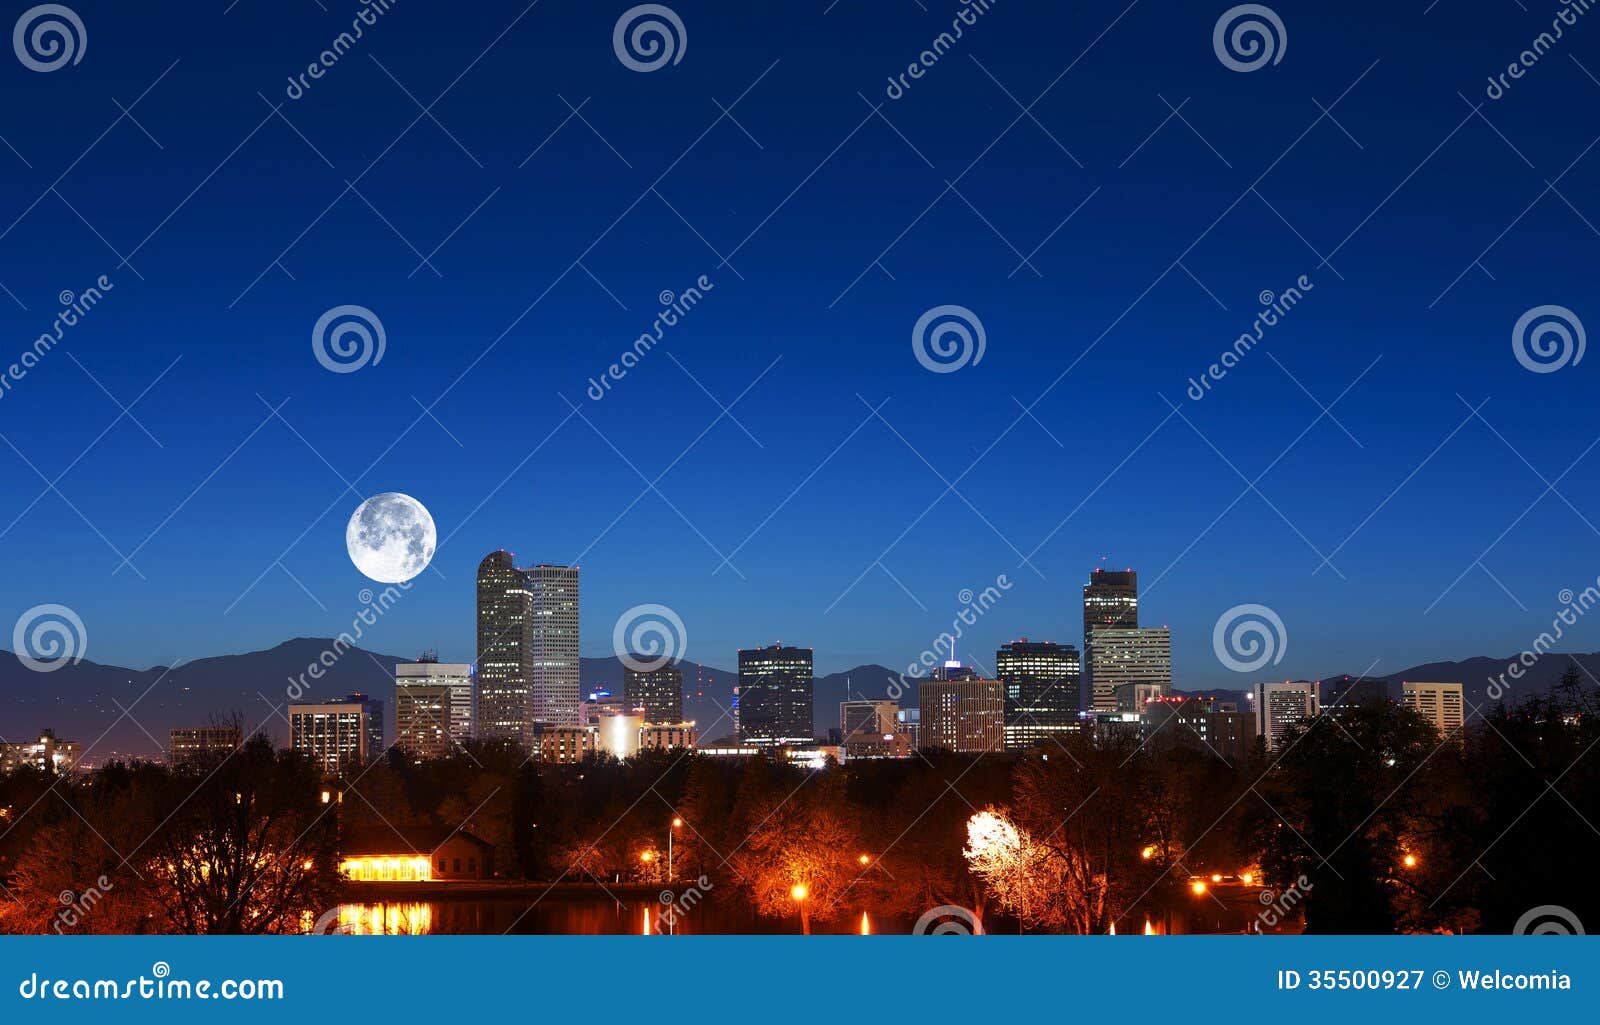 denver skyline with moon